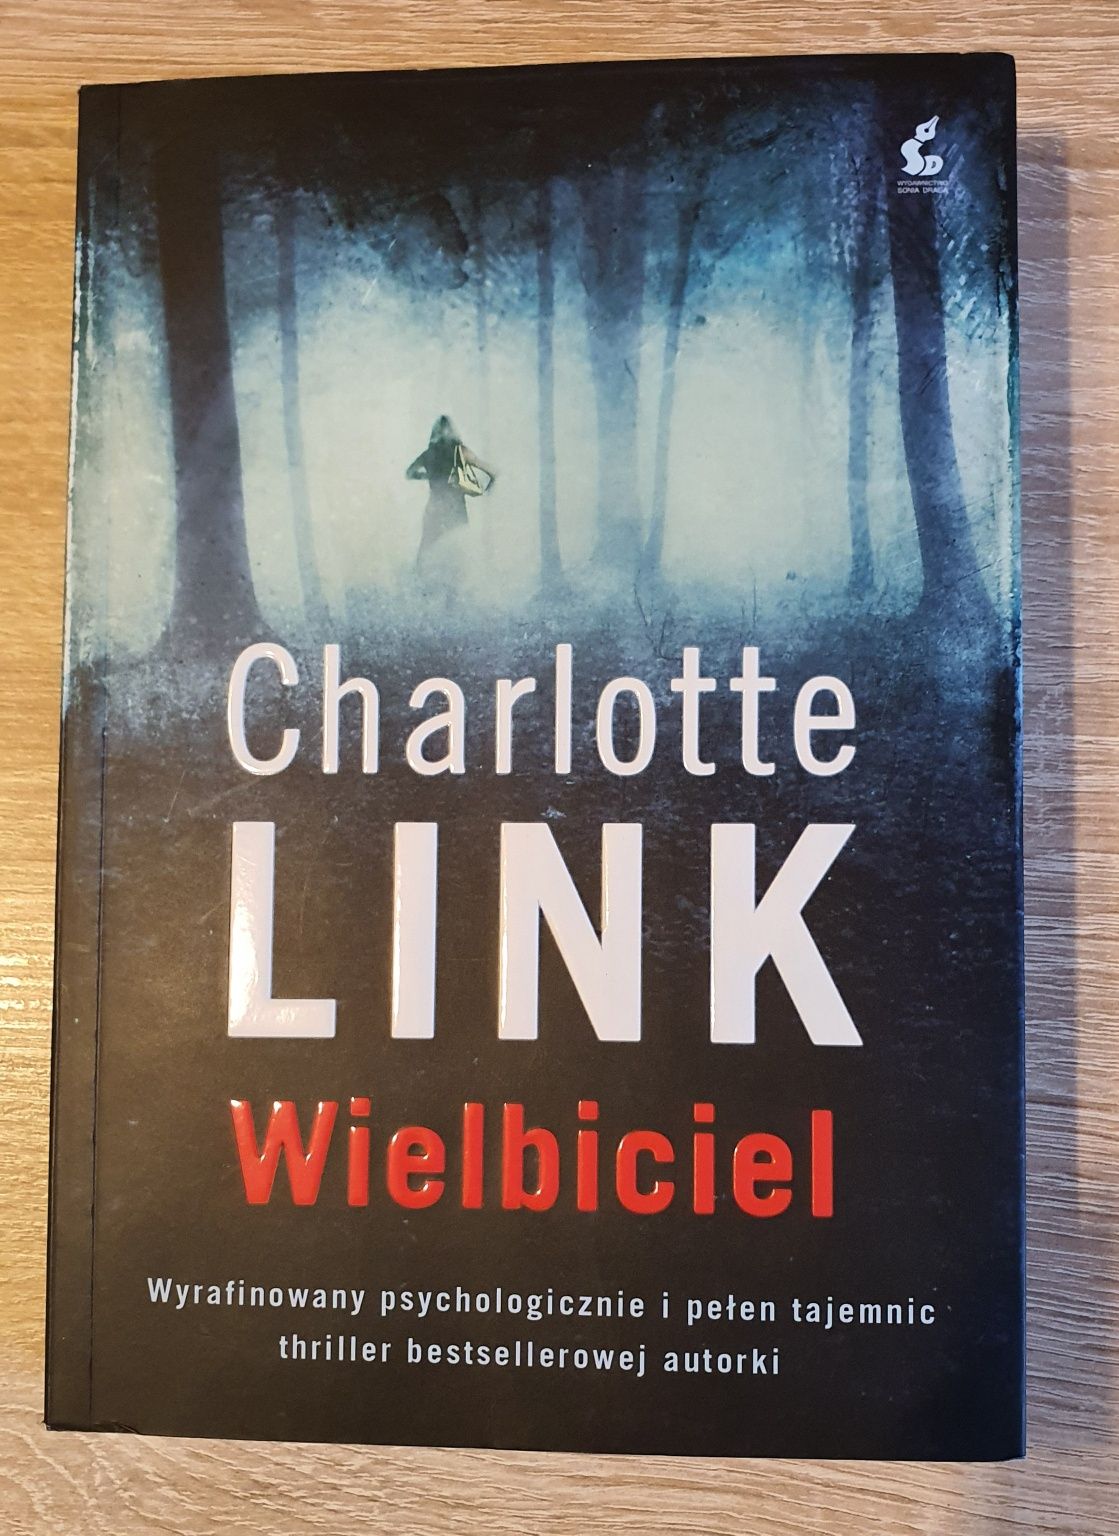 Charlotte Link Wielbiciel